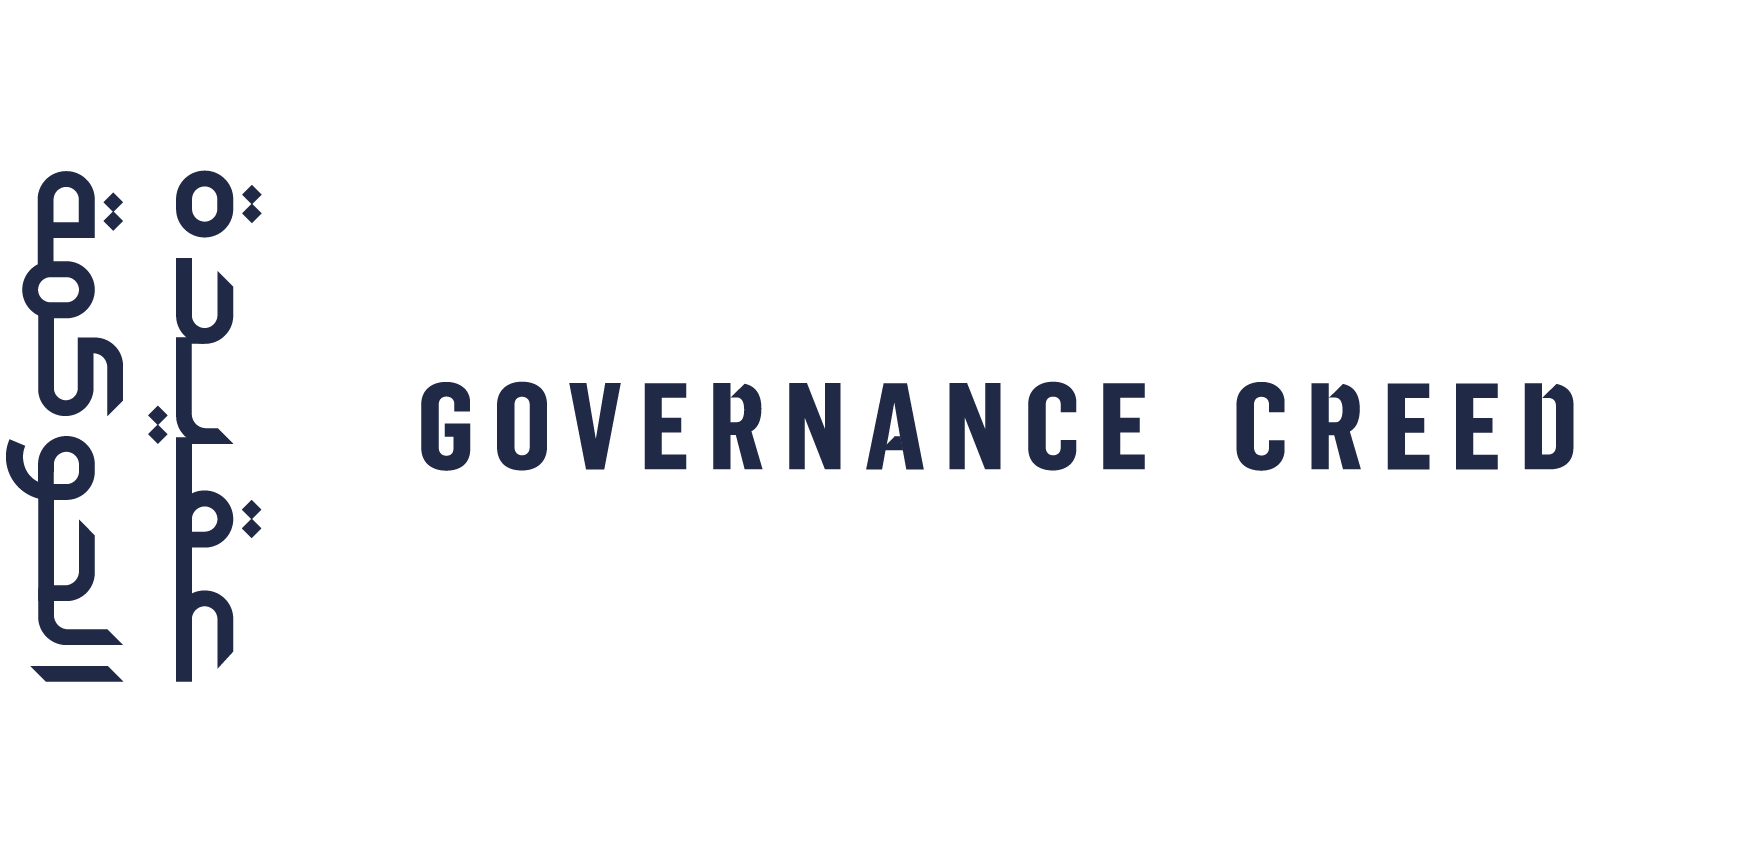 Governance Creed